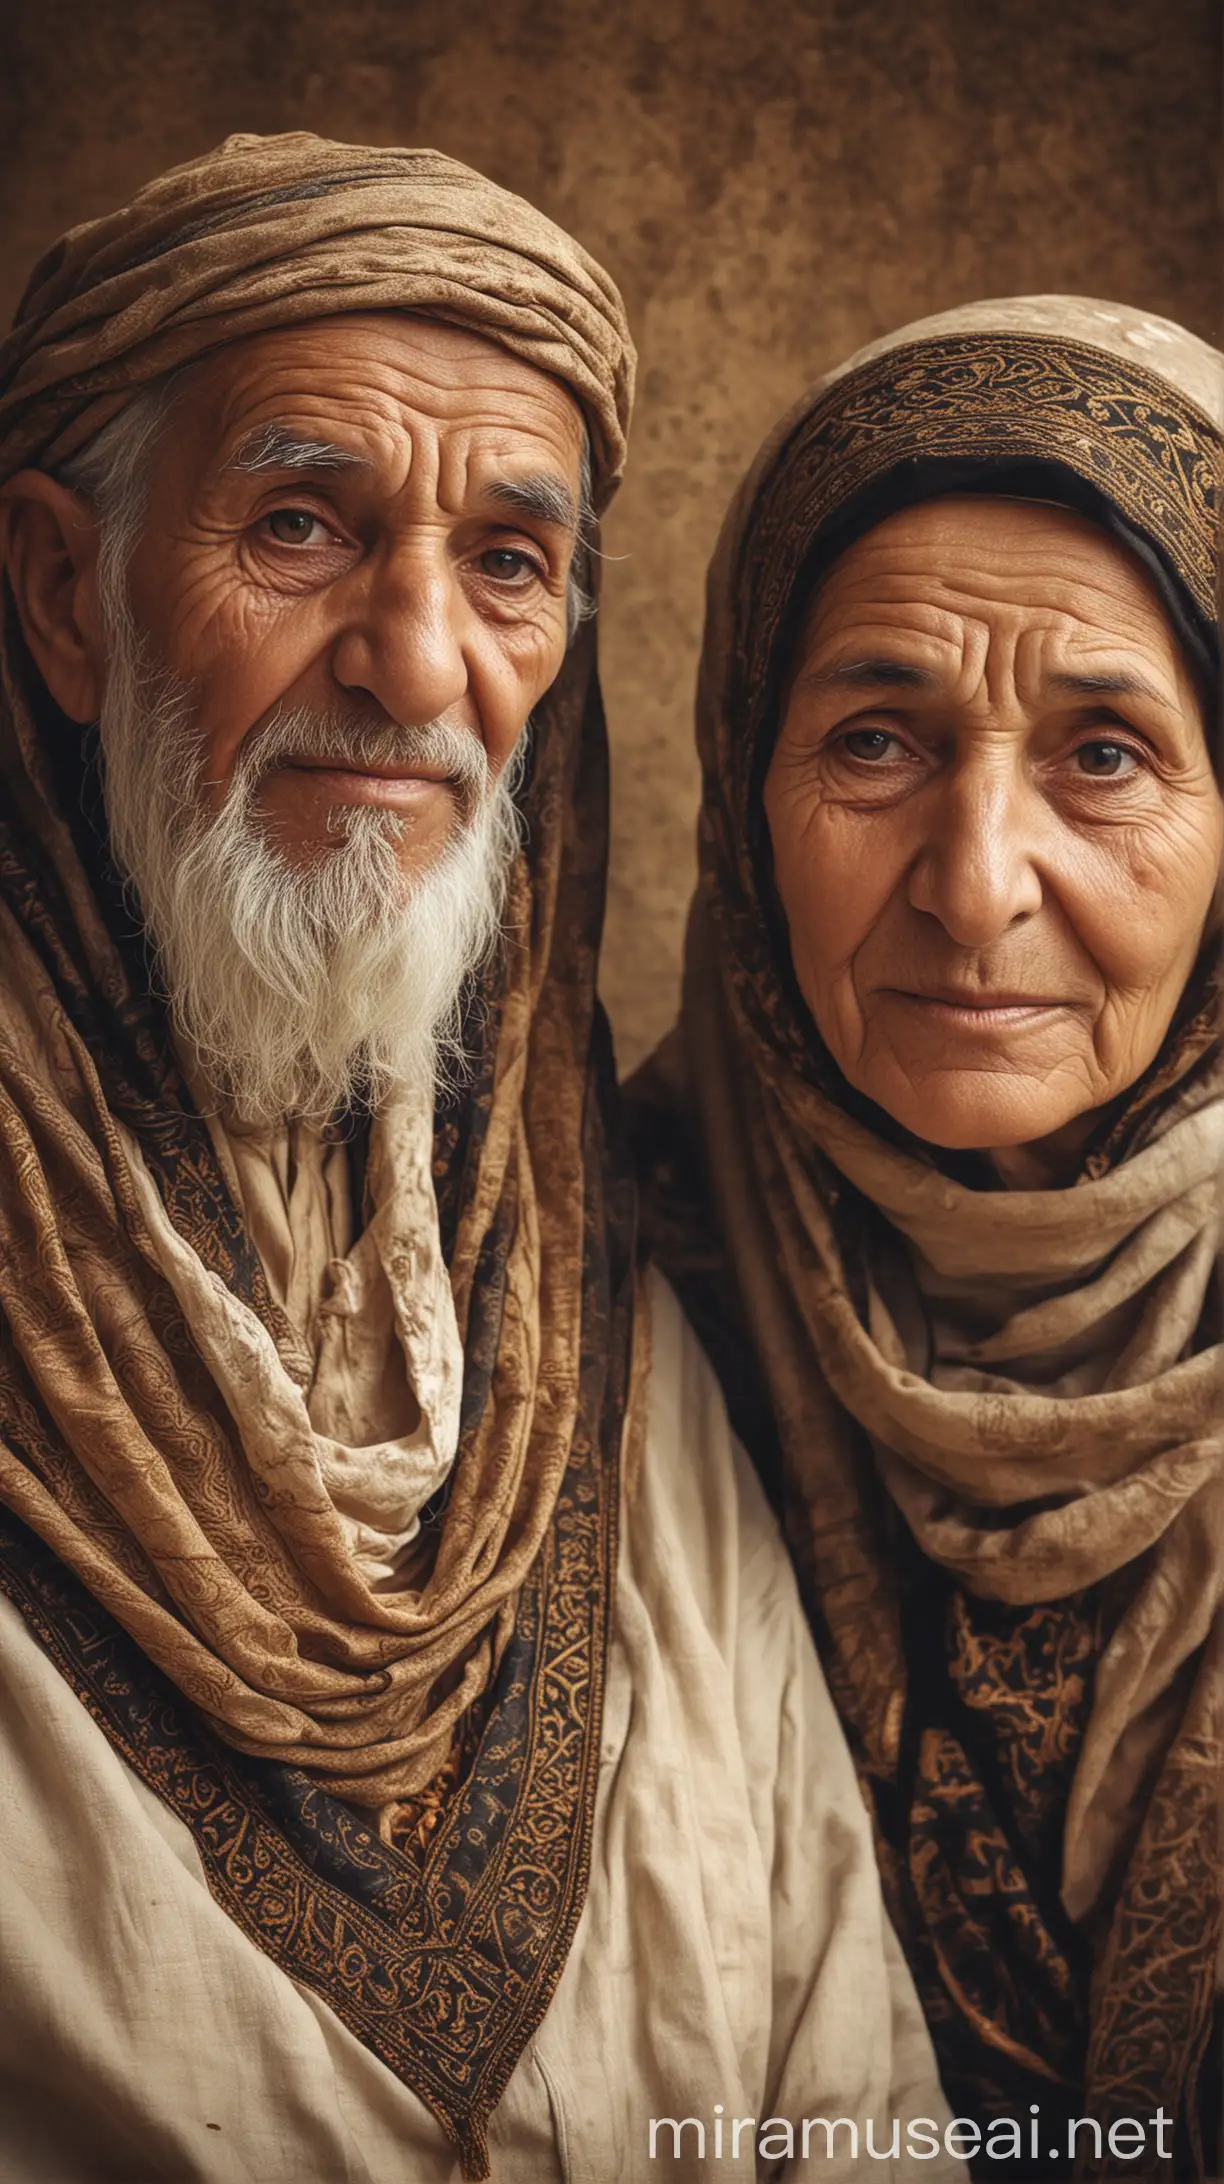 Elderly Arabian Couple in Ancient Setting